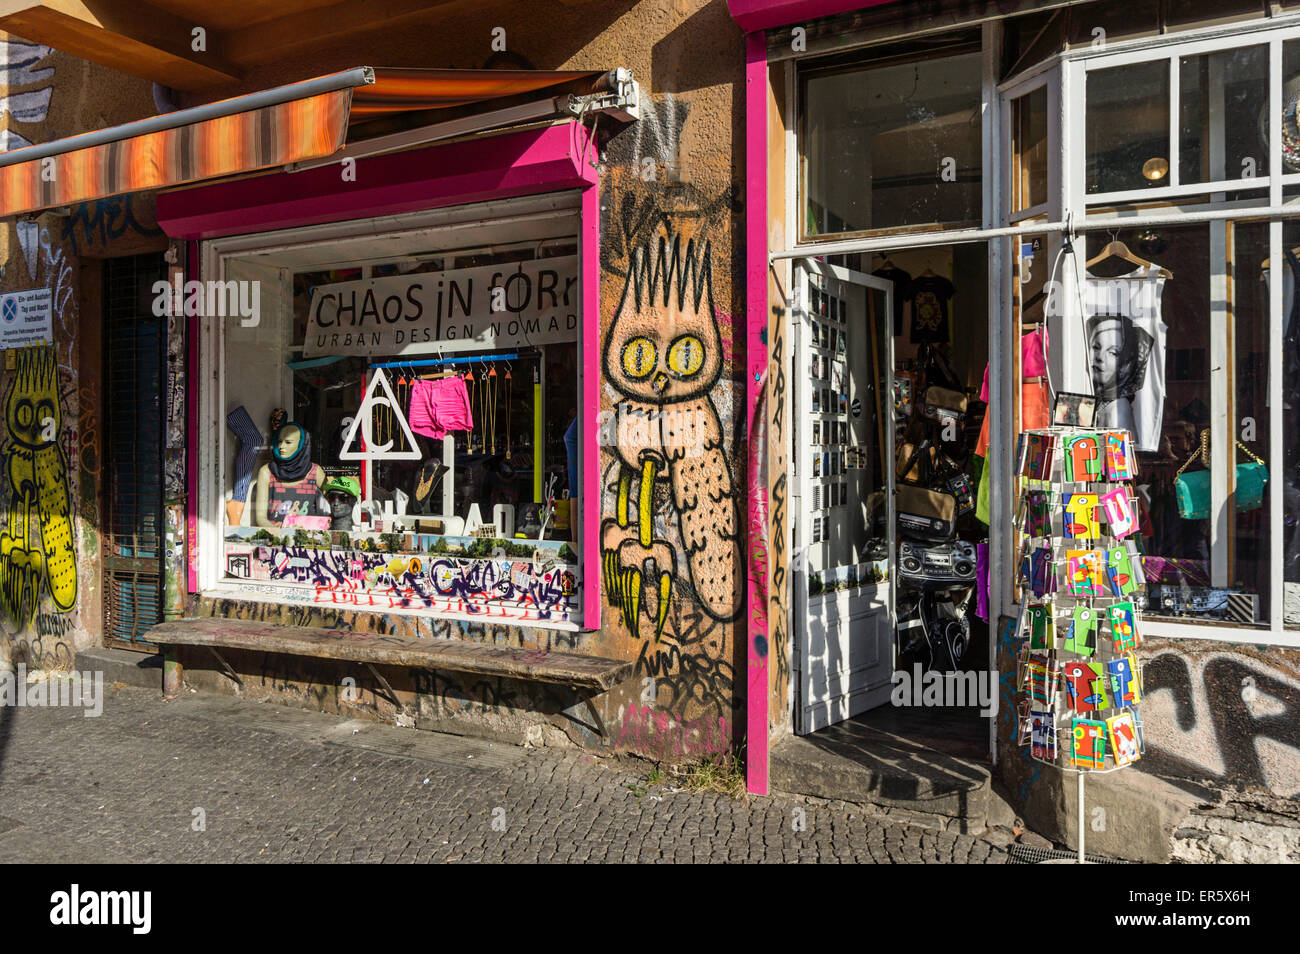 Street Cafe, Club-Szene, Chaos in Form-Shop, Falkenstein Straße nahe der Oberbaumbrücke, Kreuzberg, Berlin, Deutschland Stockfoto